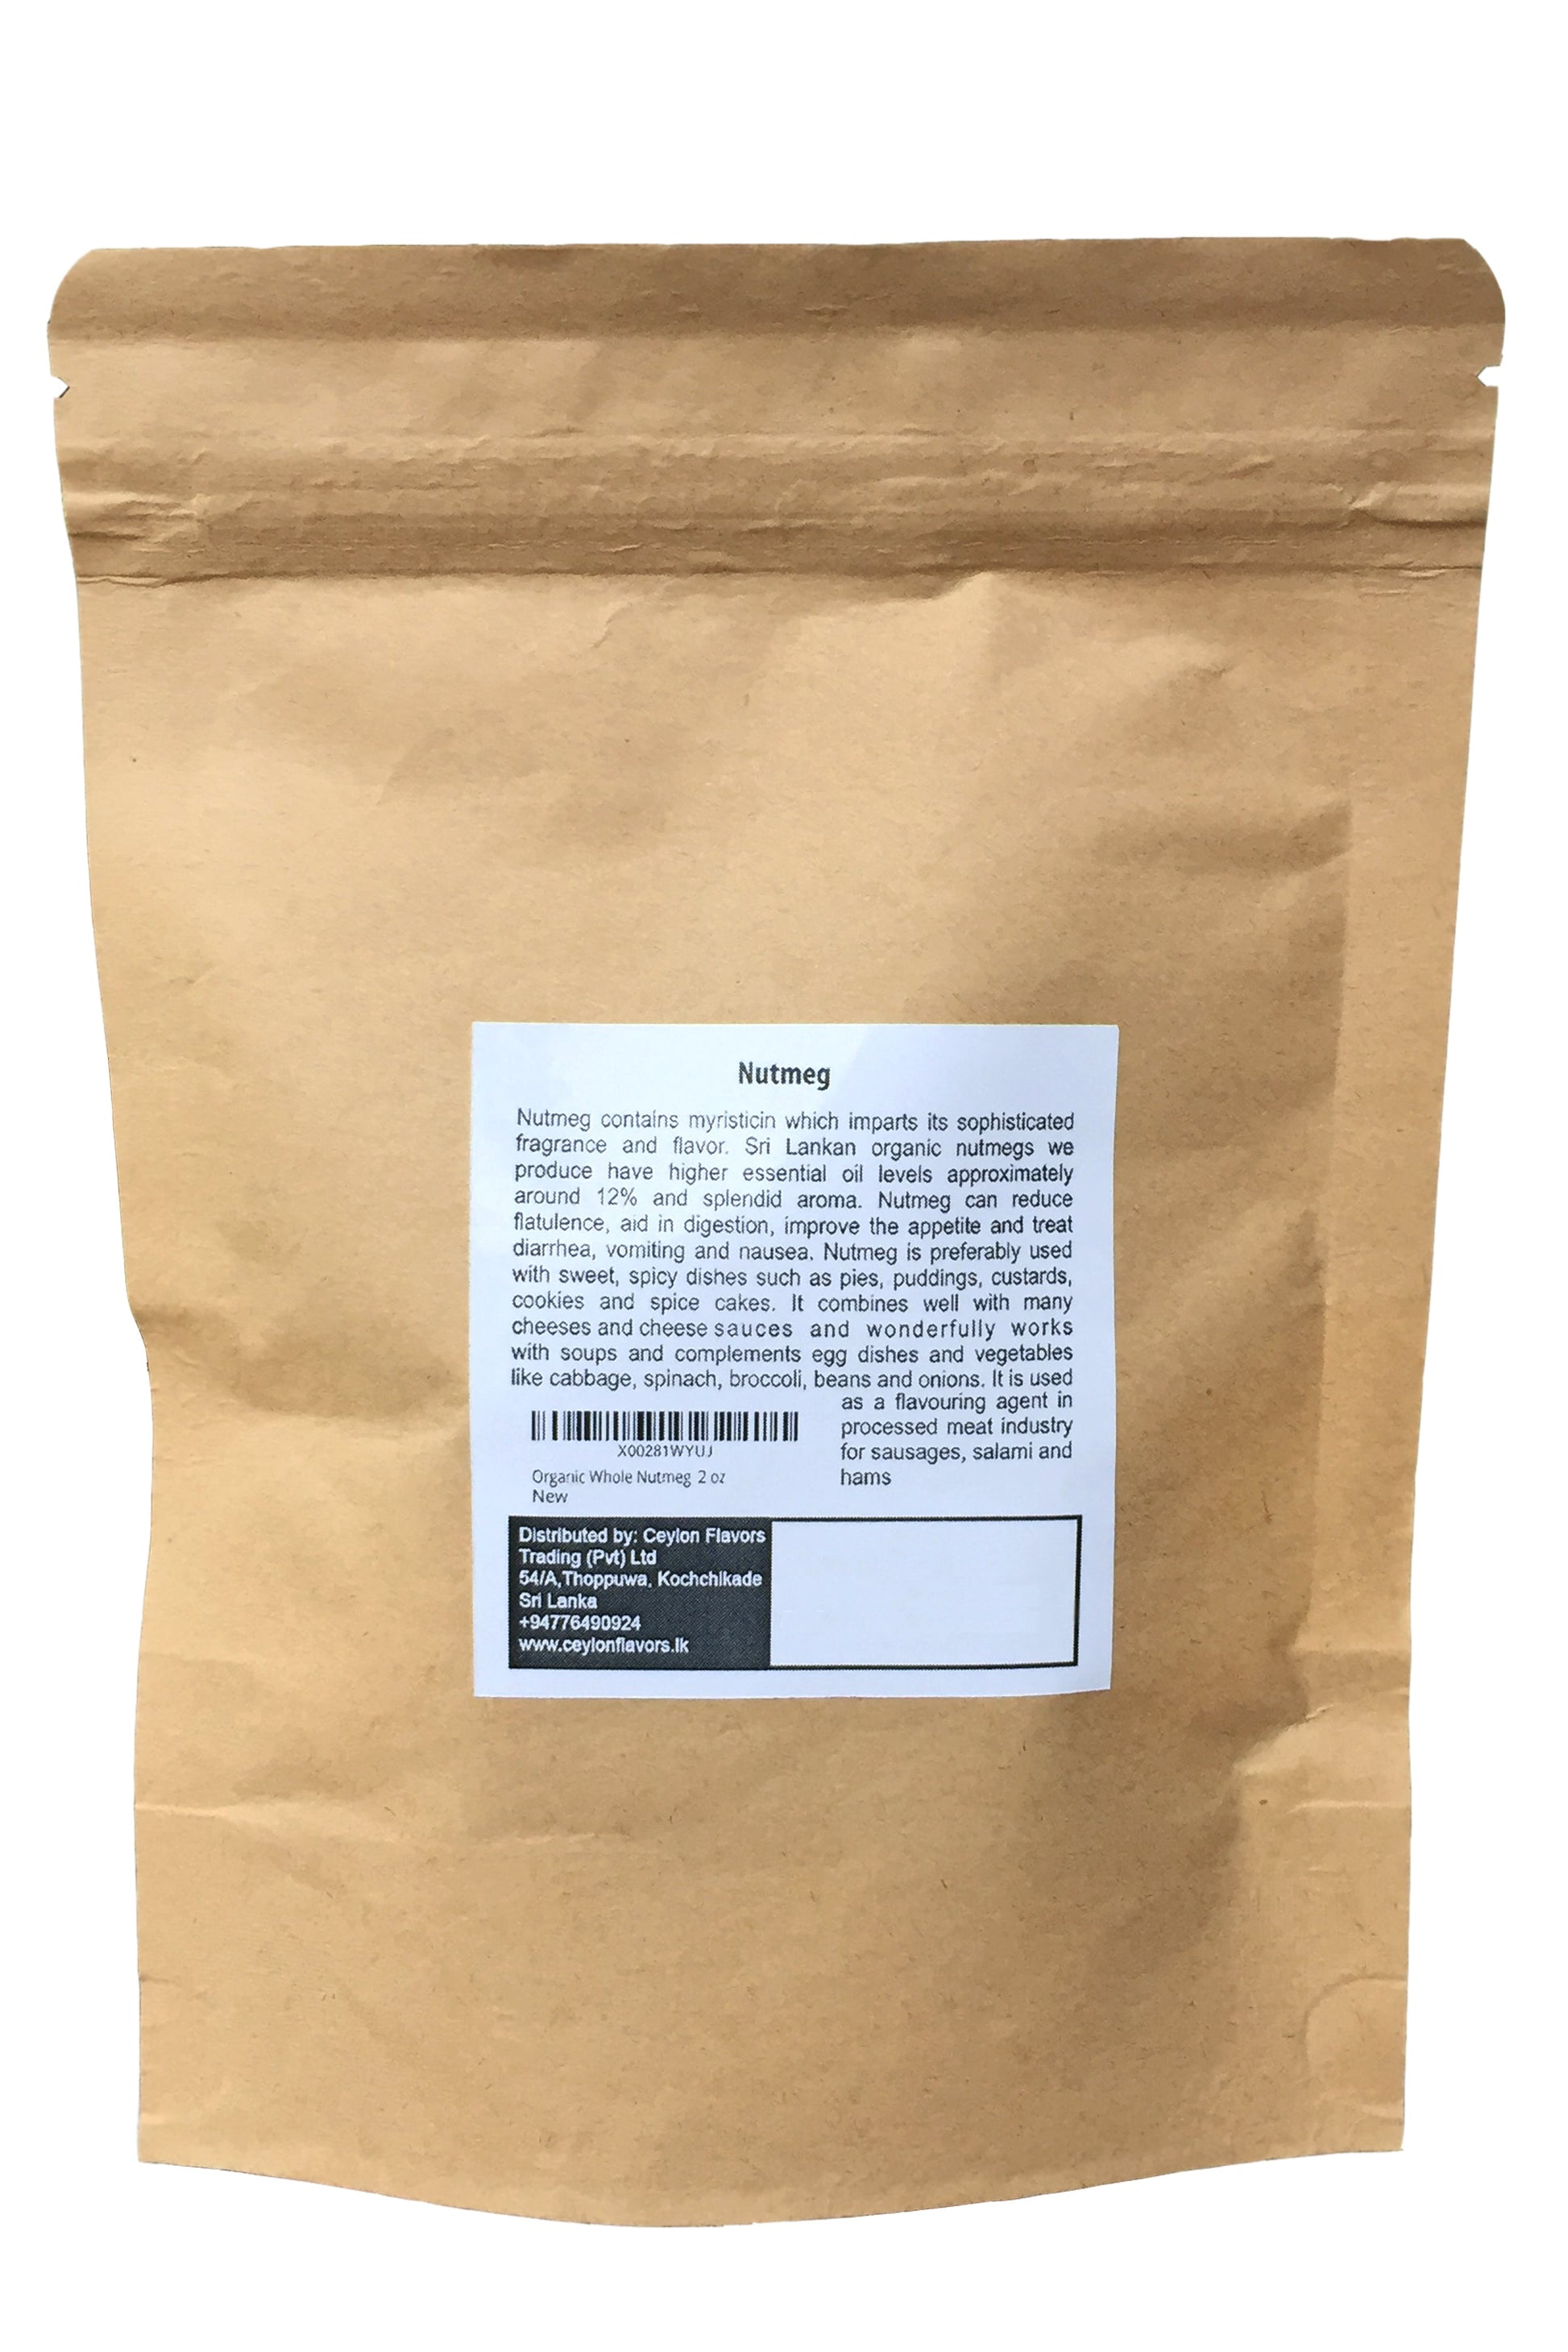 Organic Whole Nutmeg - Premium Grade (2oz/56g) Ceylon Flavors - Fresh and Pure